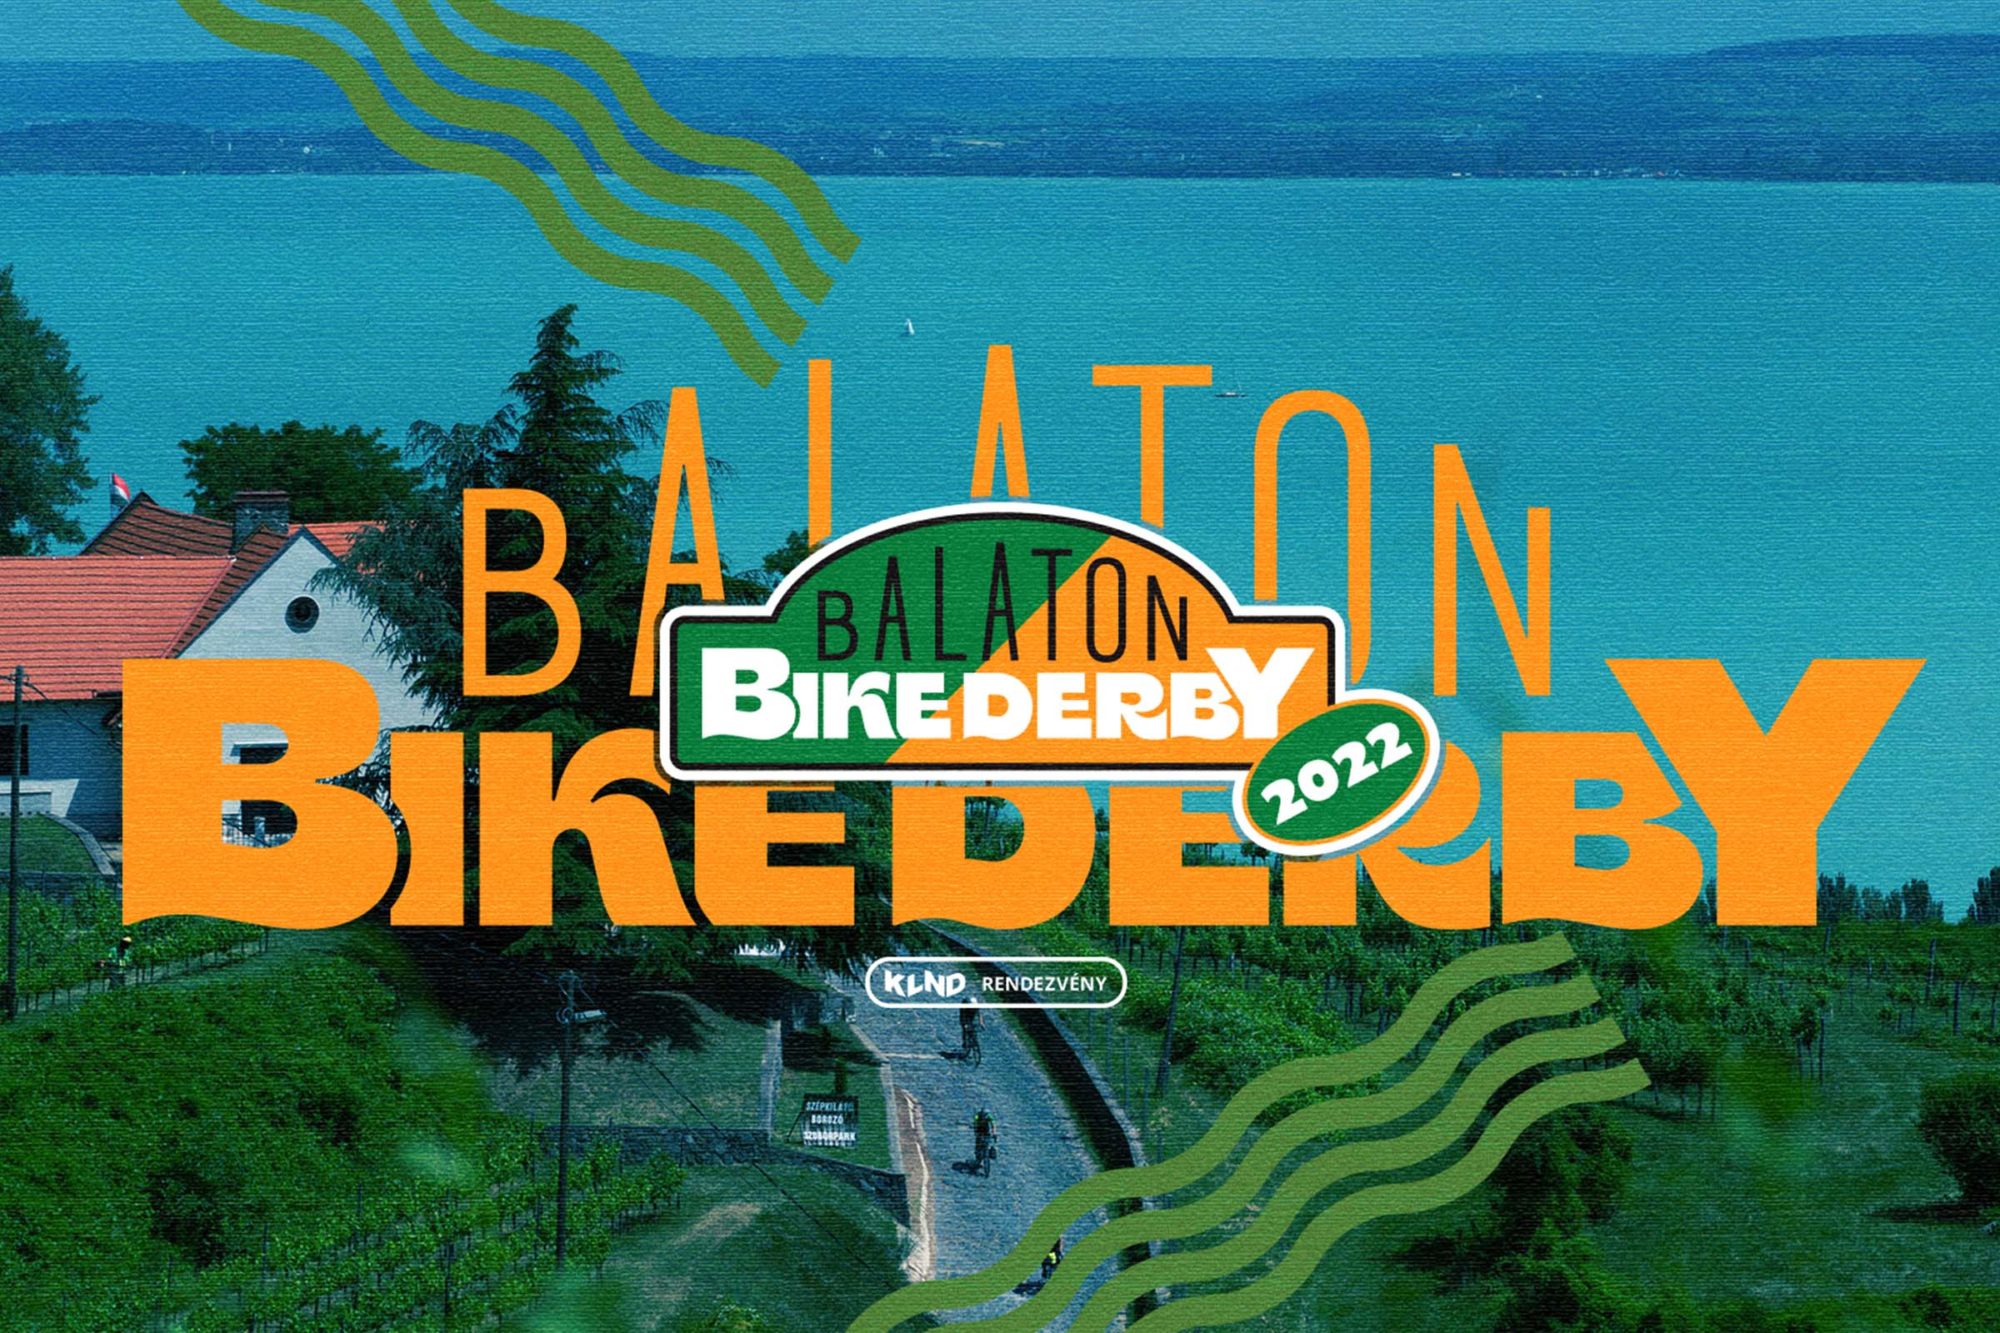 Balaton Bike Derby